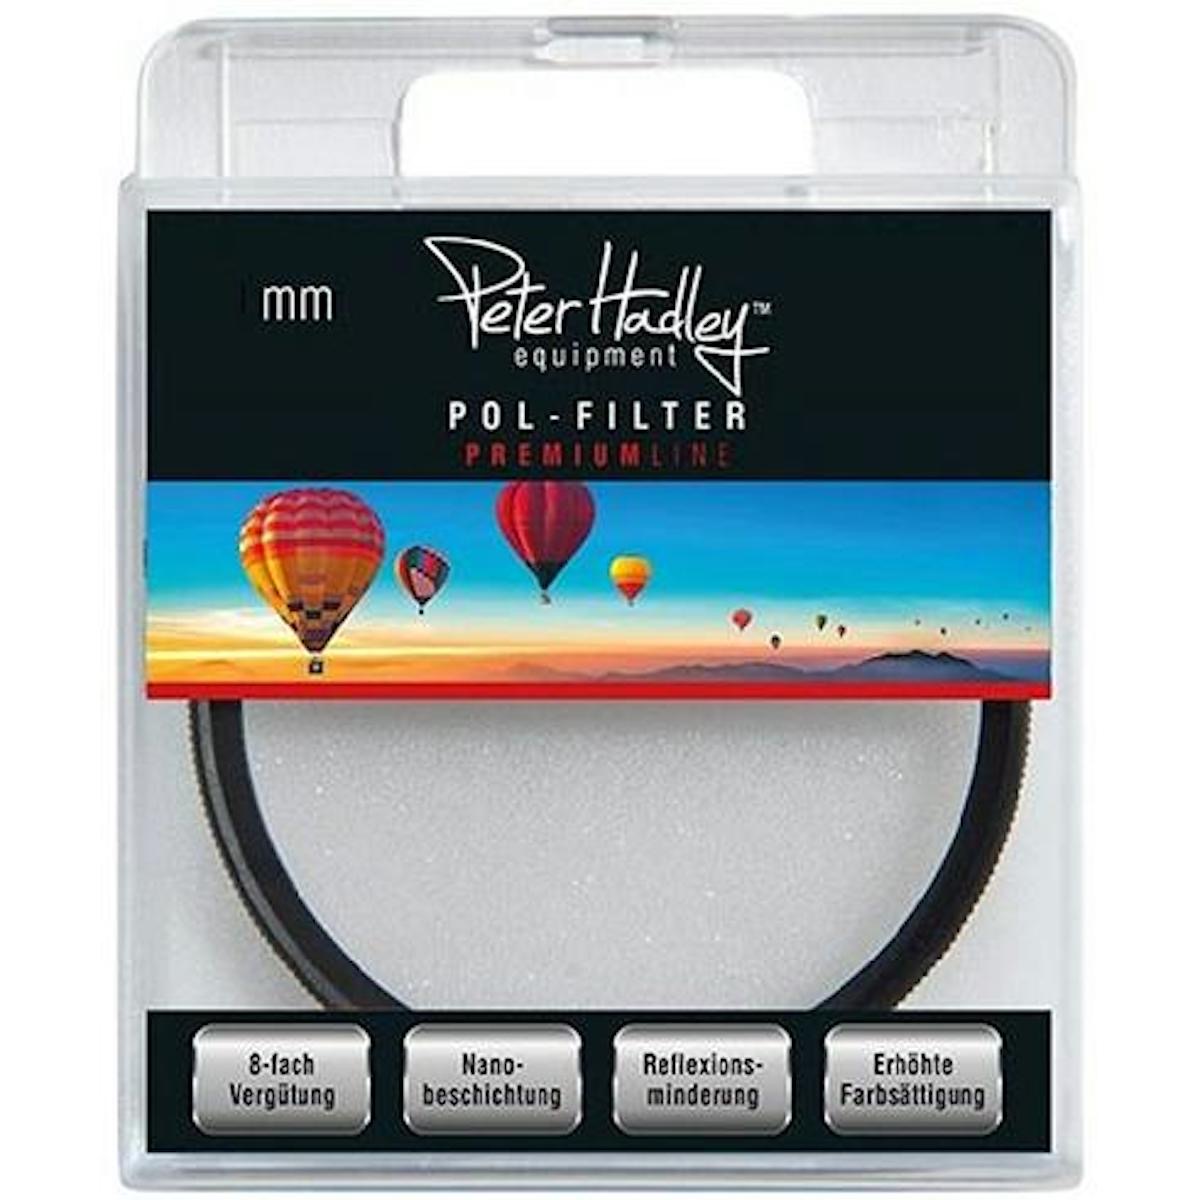 Peter Hadley Polfilter 40,5mm